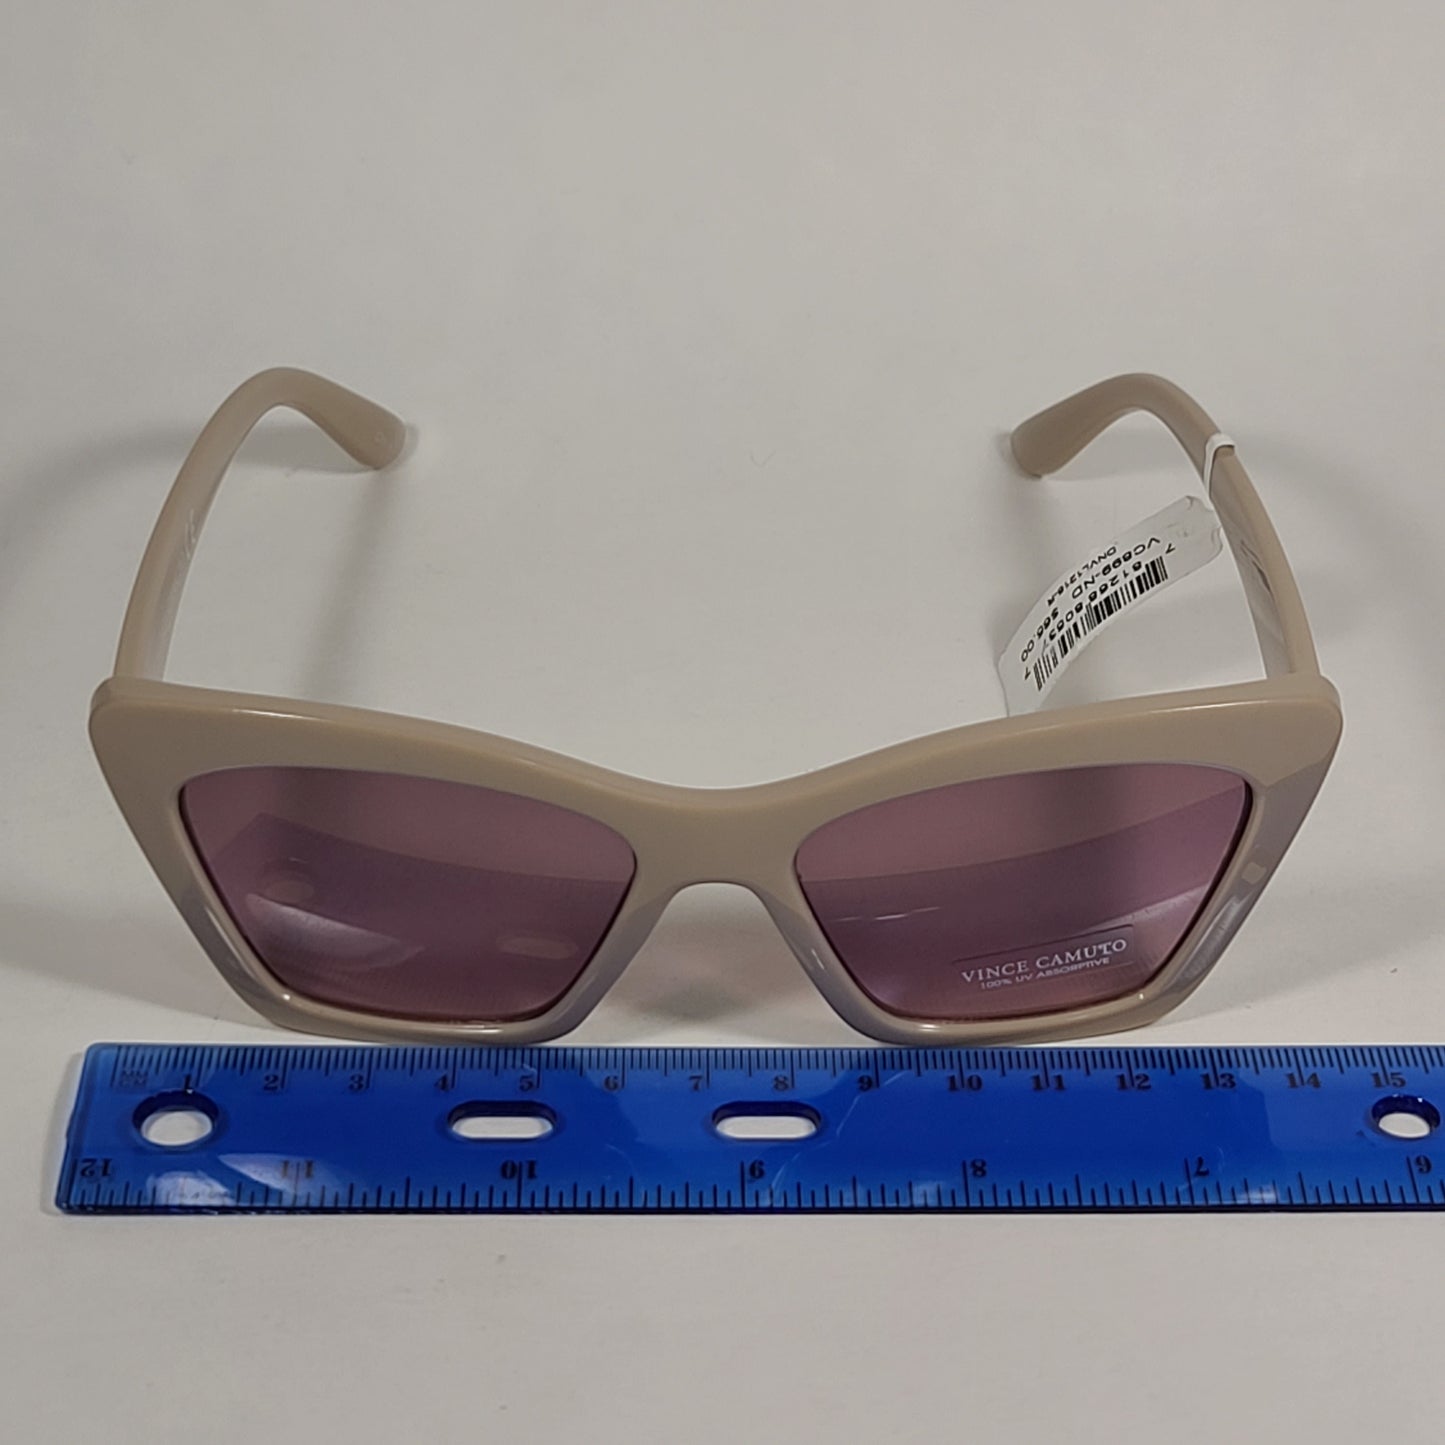 Vince Camuto Cat Eye Sunglasses Tan Nude Frame Light Pink Lens VC899 ND - Sunglasses